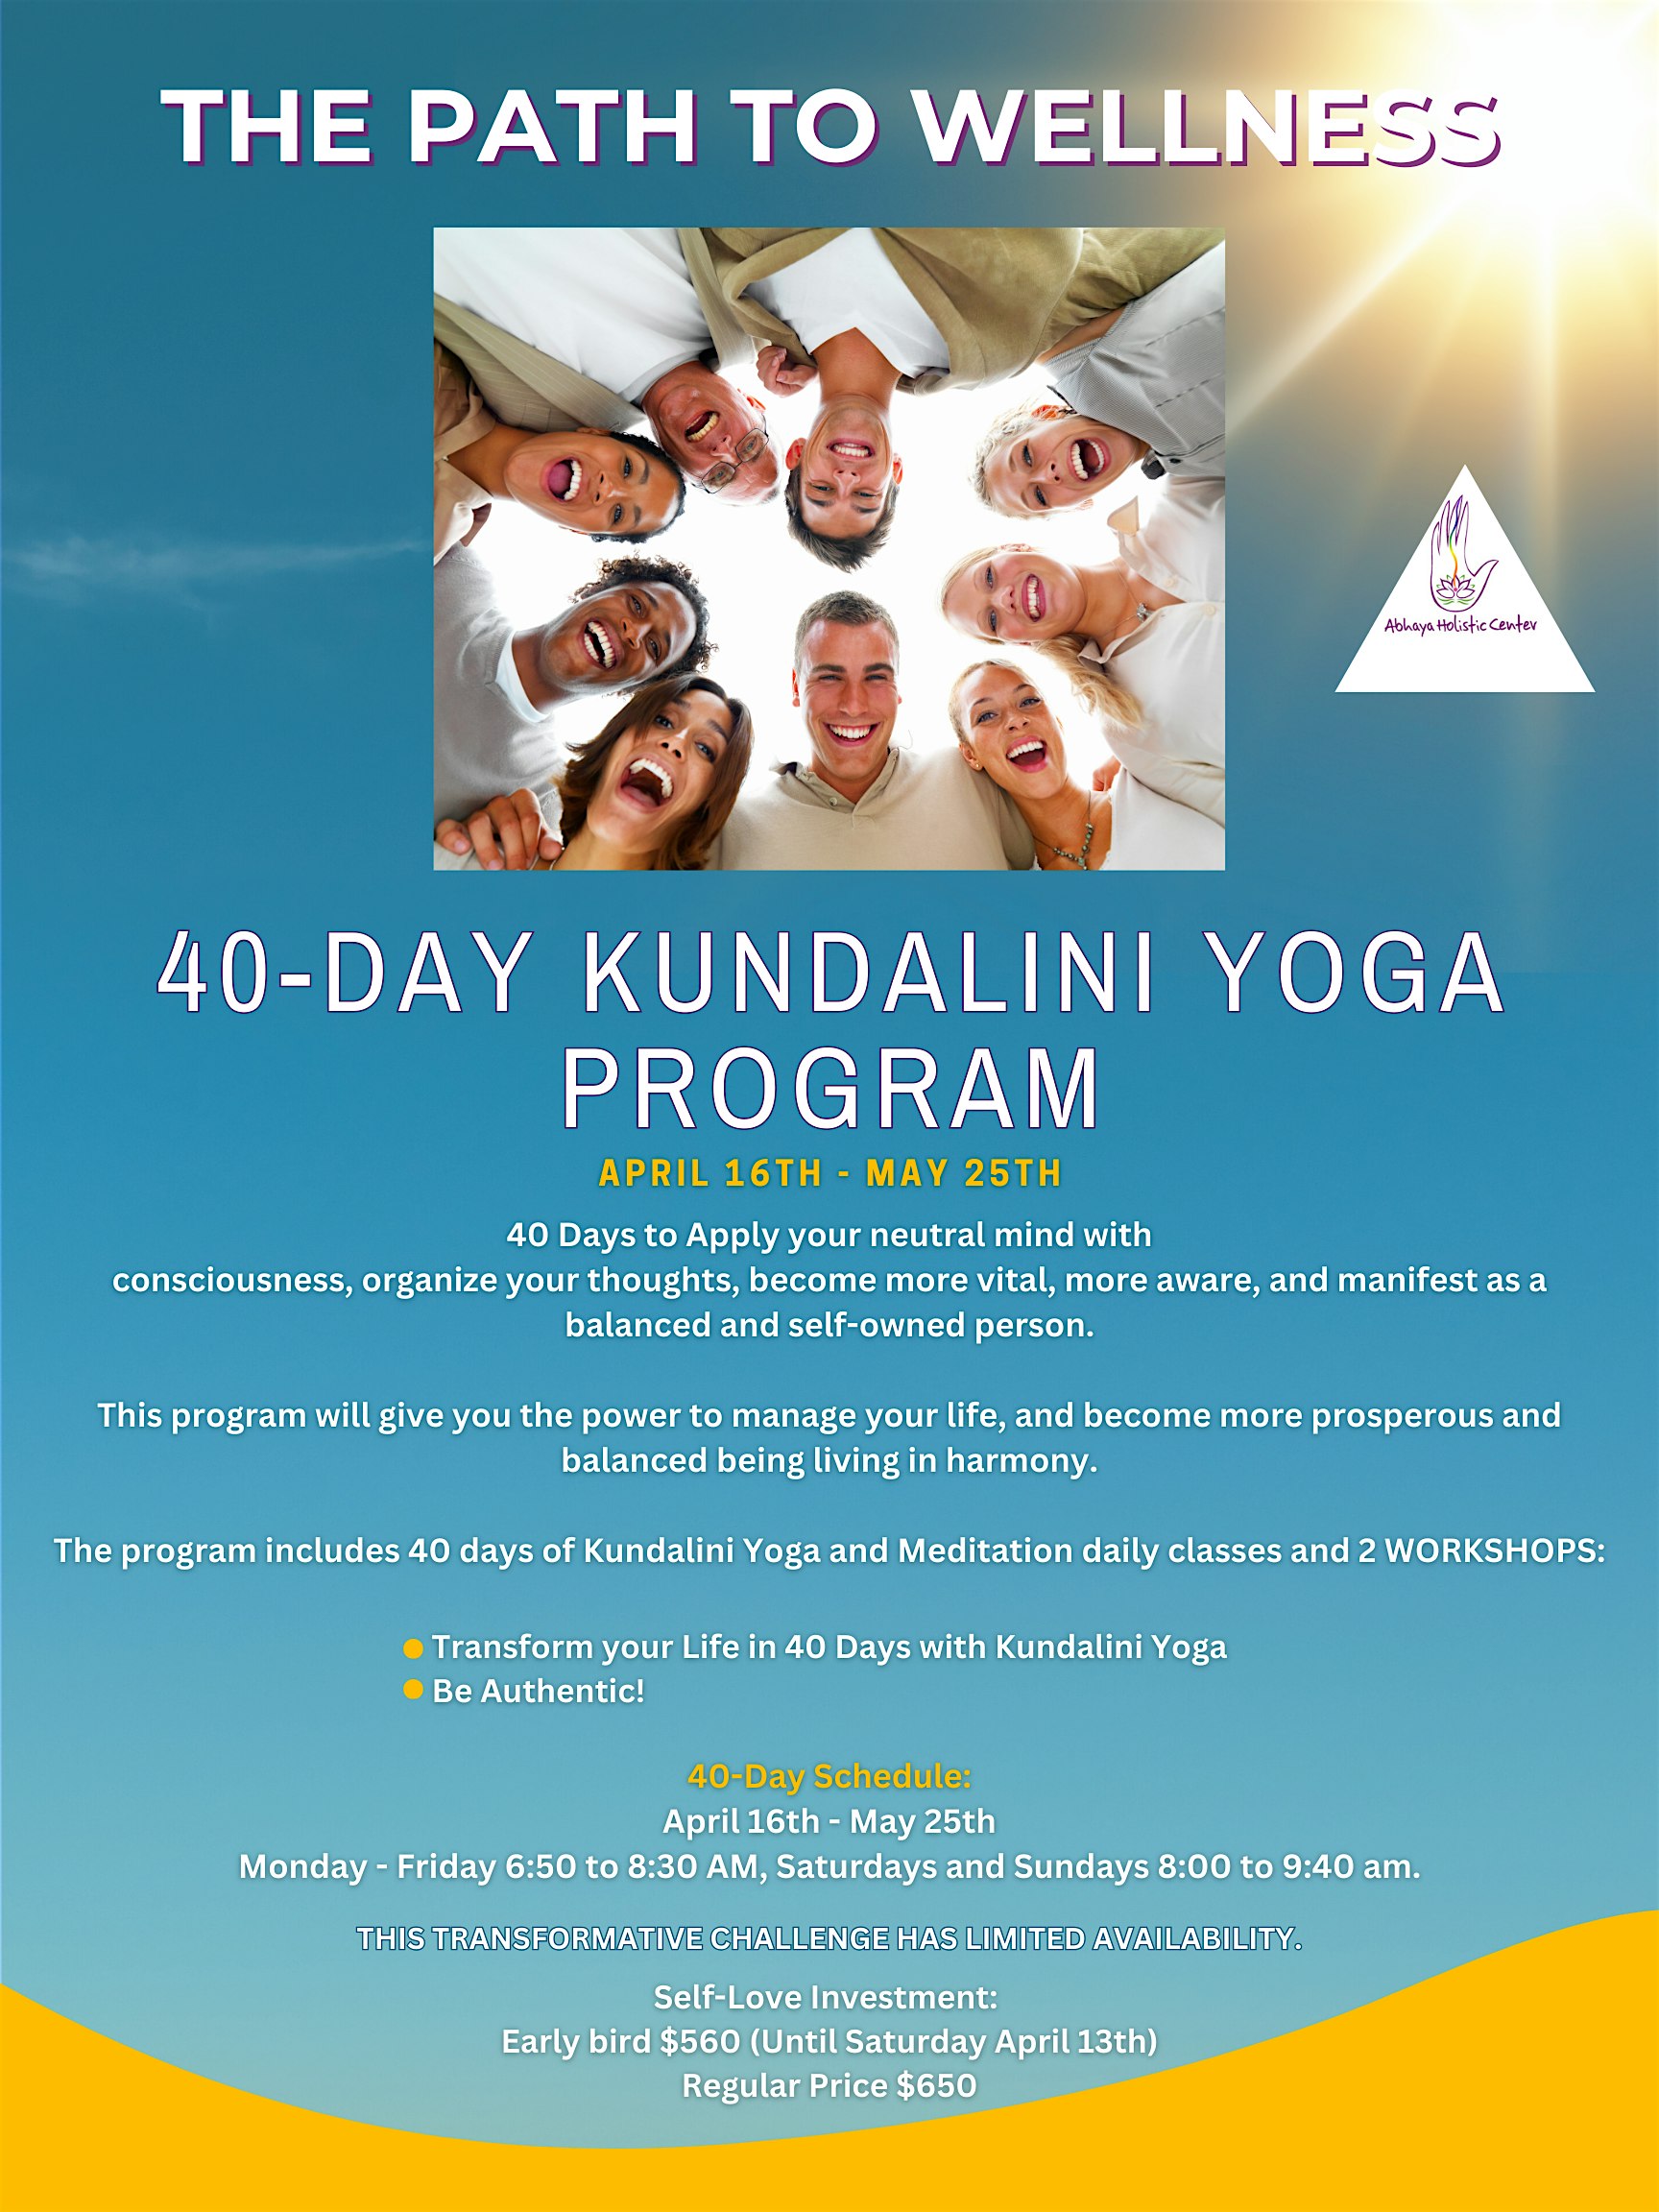 40-Day Kundalini Yoga Program: The Path to Wellness